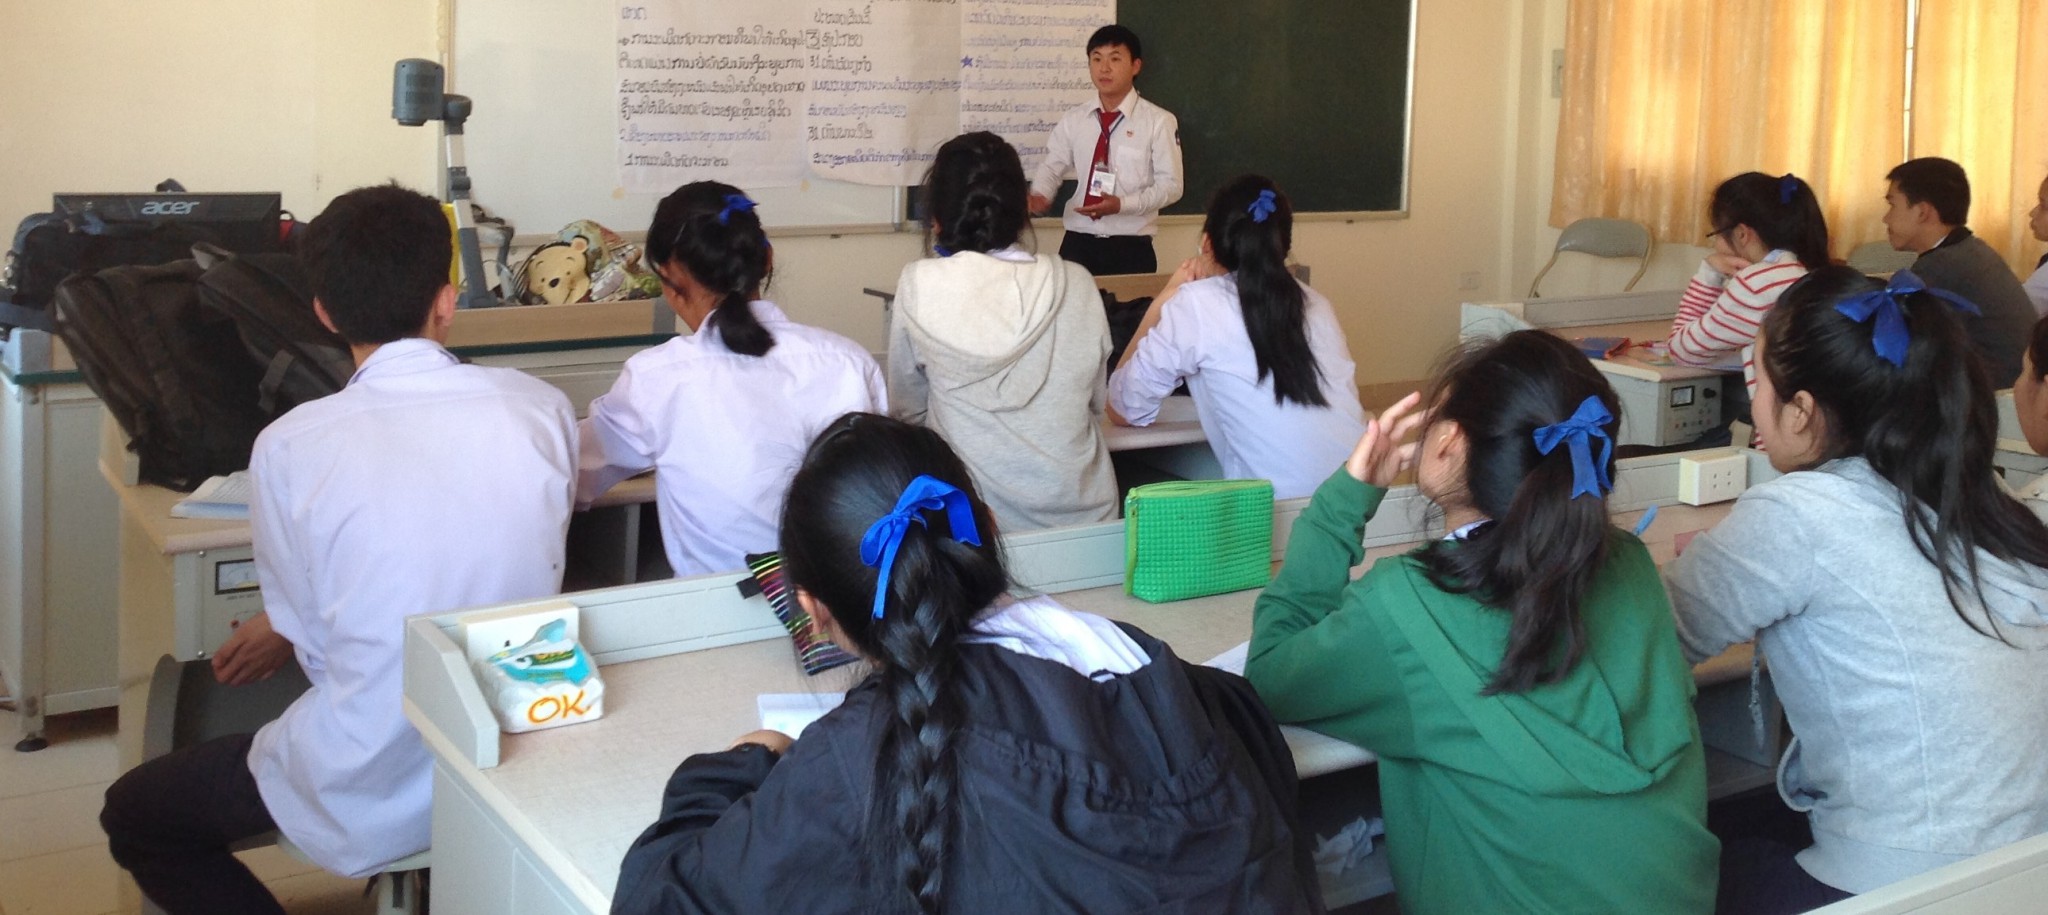 FLP CLE Community Teaching in Vientiane, Laos 2013- 2014 Start up with “Sisathanark Lower Secondary school”